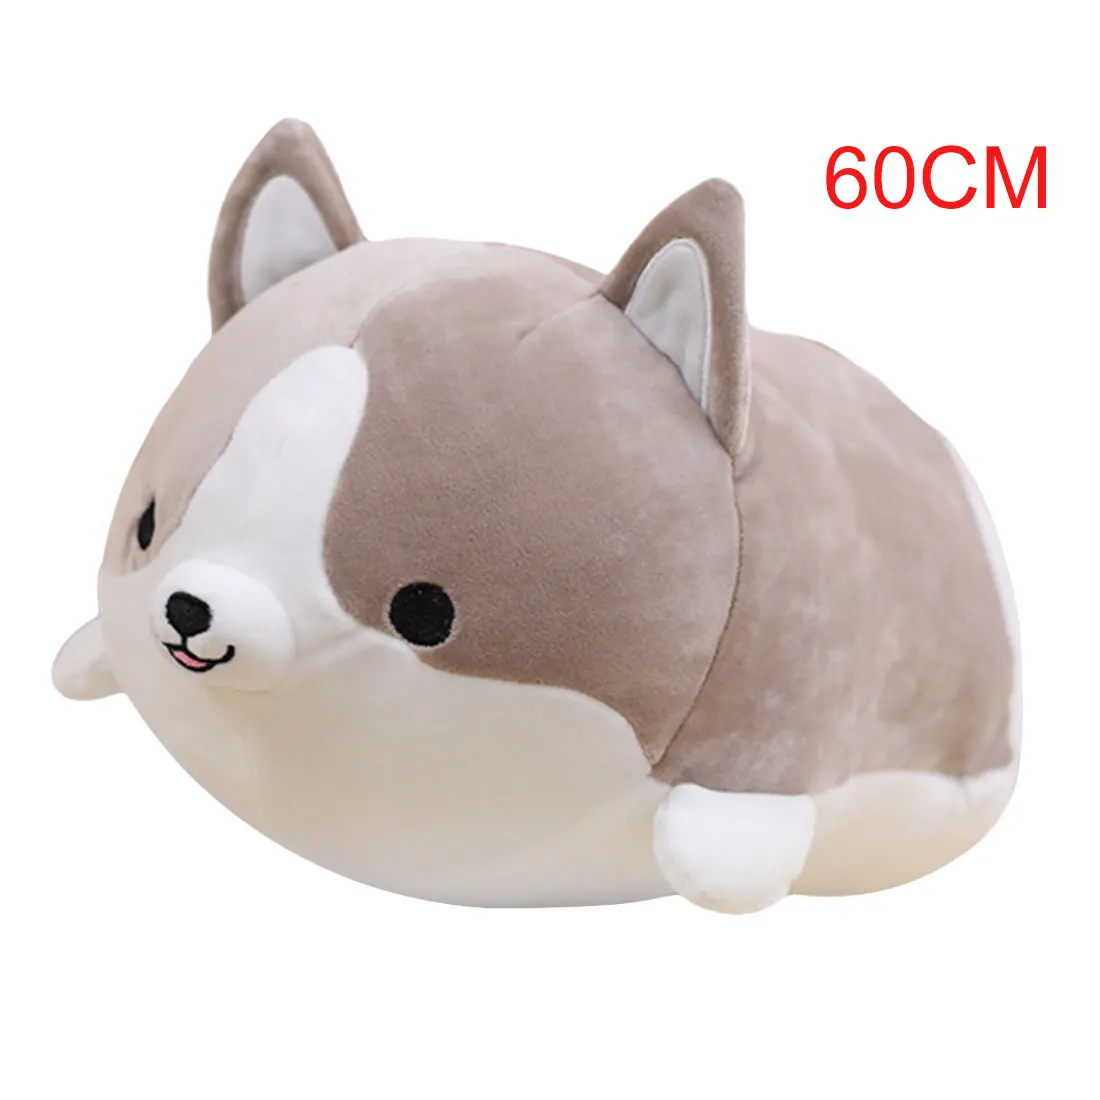 30/45/60cm Cute Corgi Dog Plush Toy Stuffed Soft Animal Cartoon Pillow Lovely Christmas Gift for Kids Kawaii Present - Цвет: gray 60CM